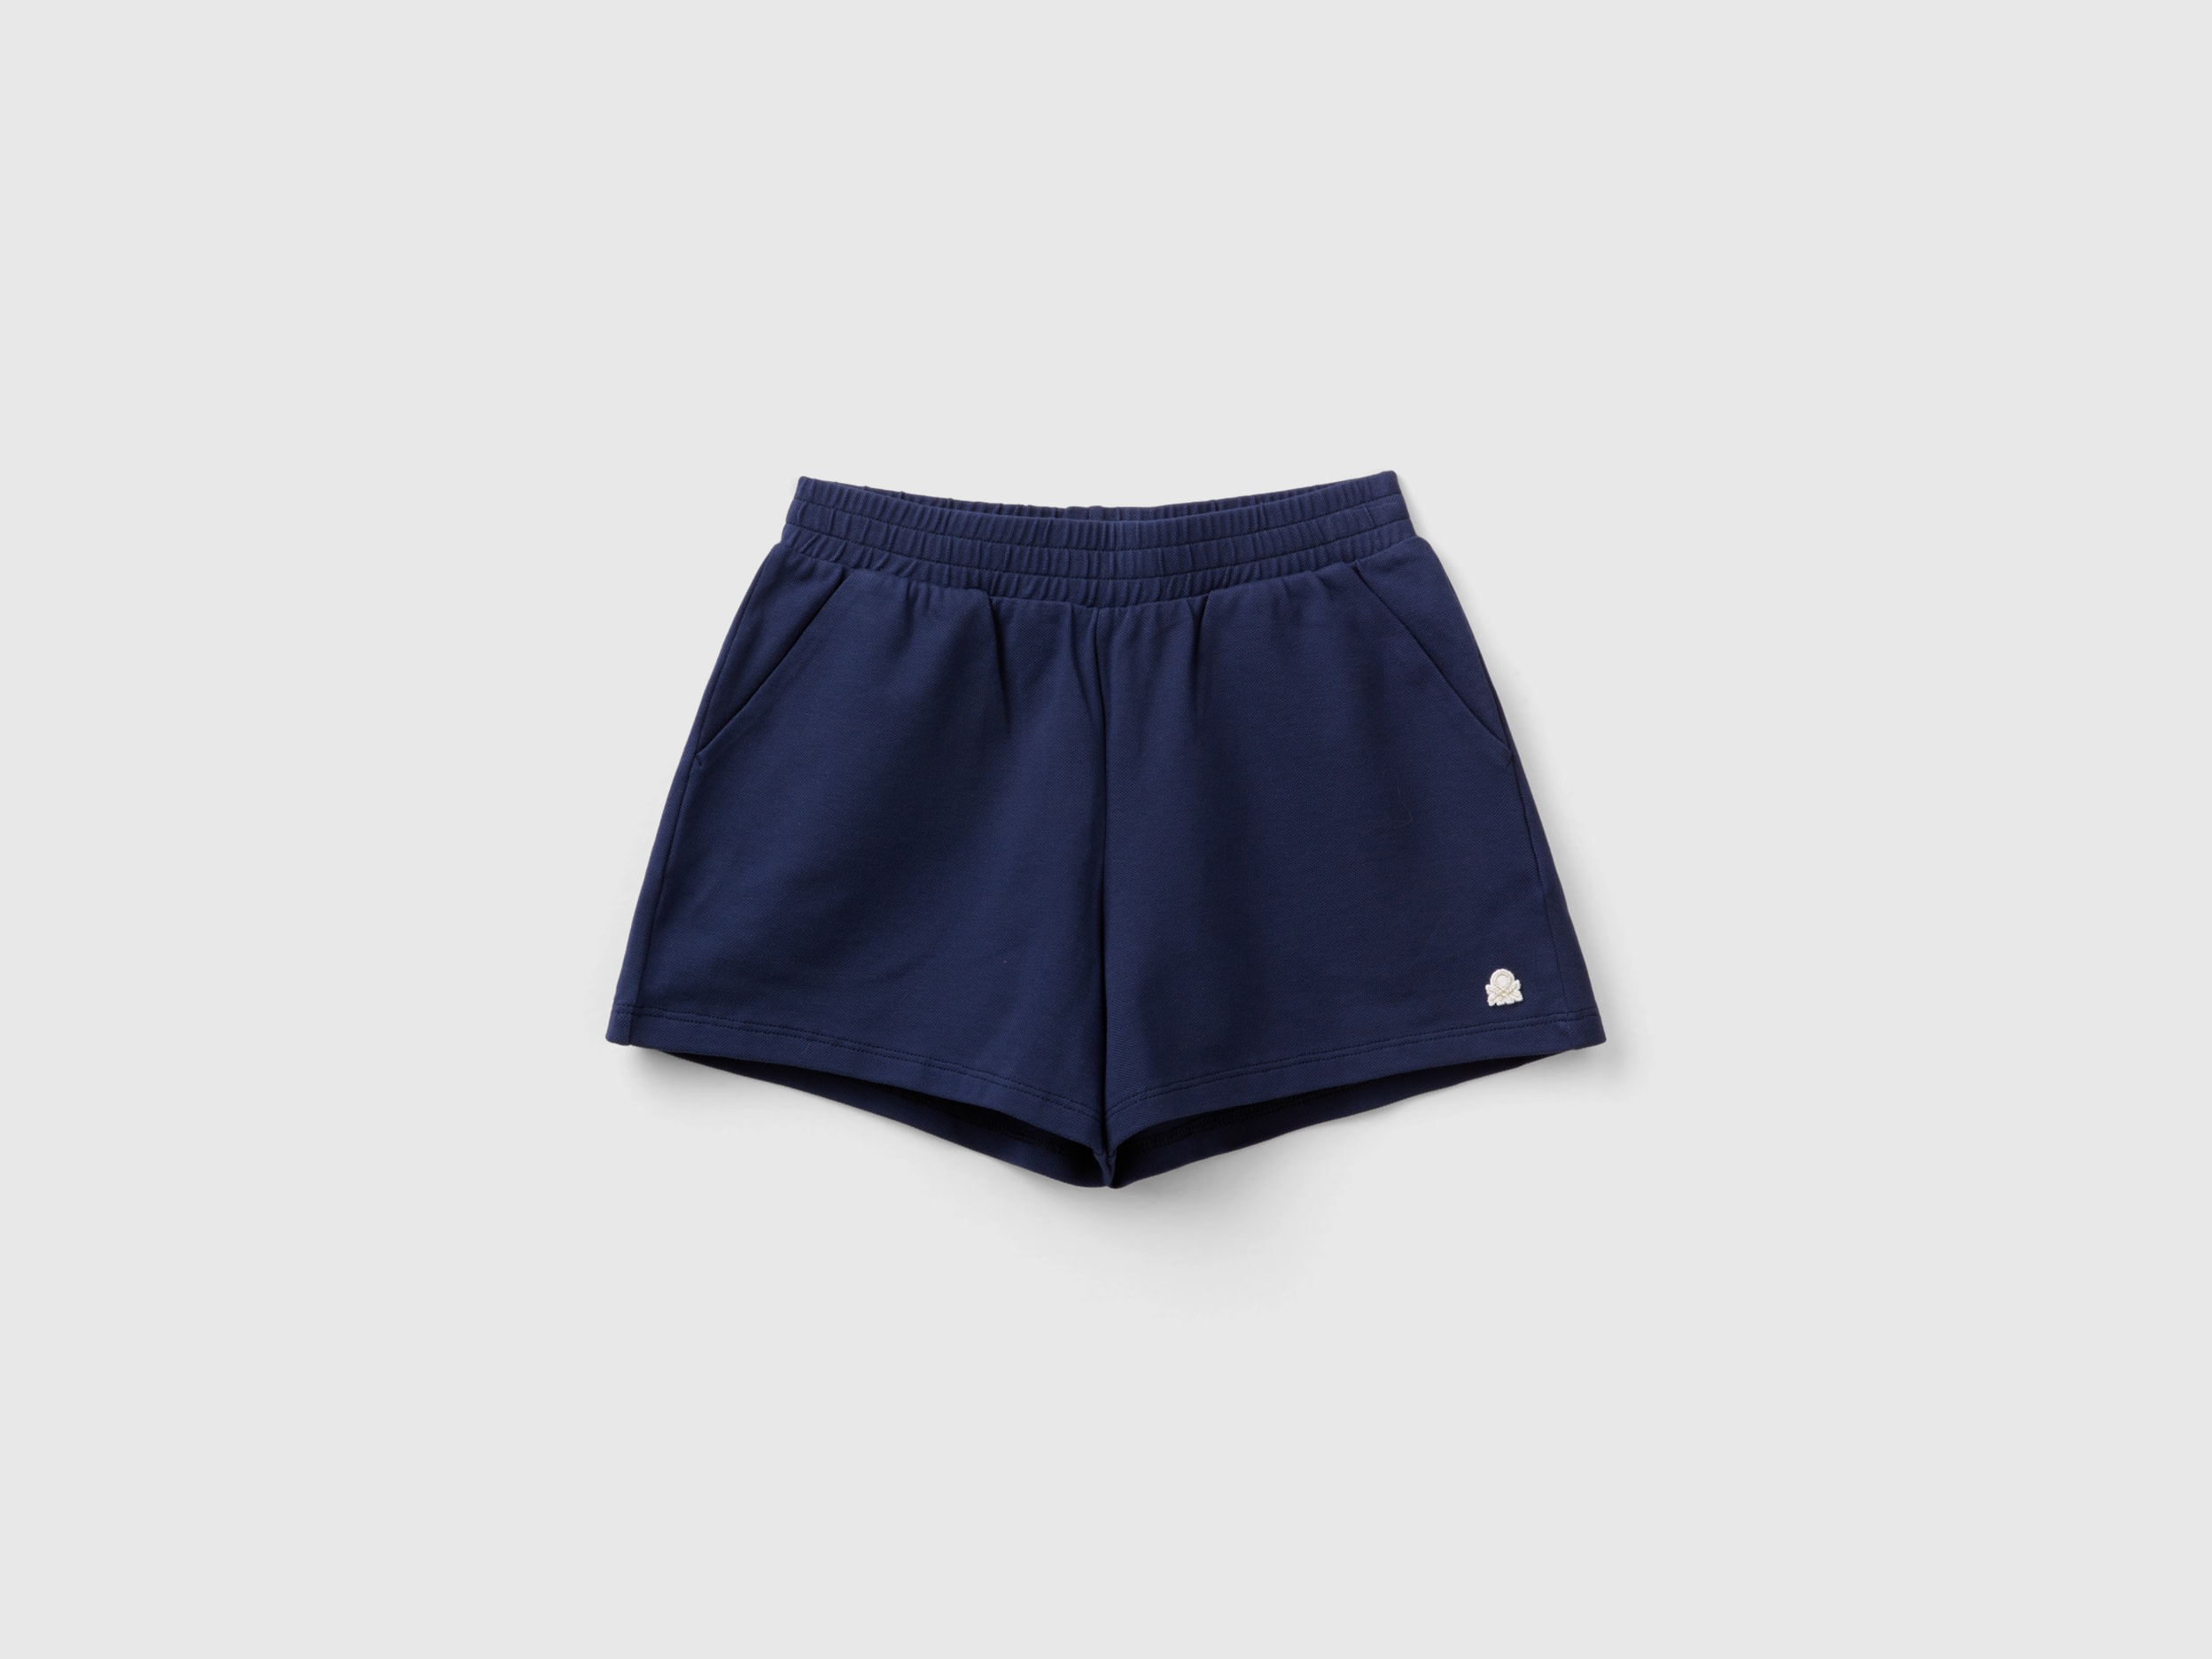 Image of Benetton, Stretch Organic Cotton Shorts, size 3XL, Dark Blue, Kids